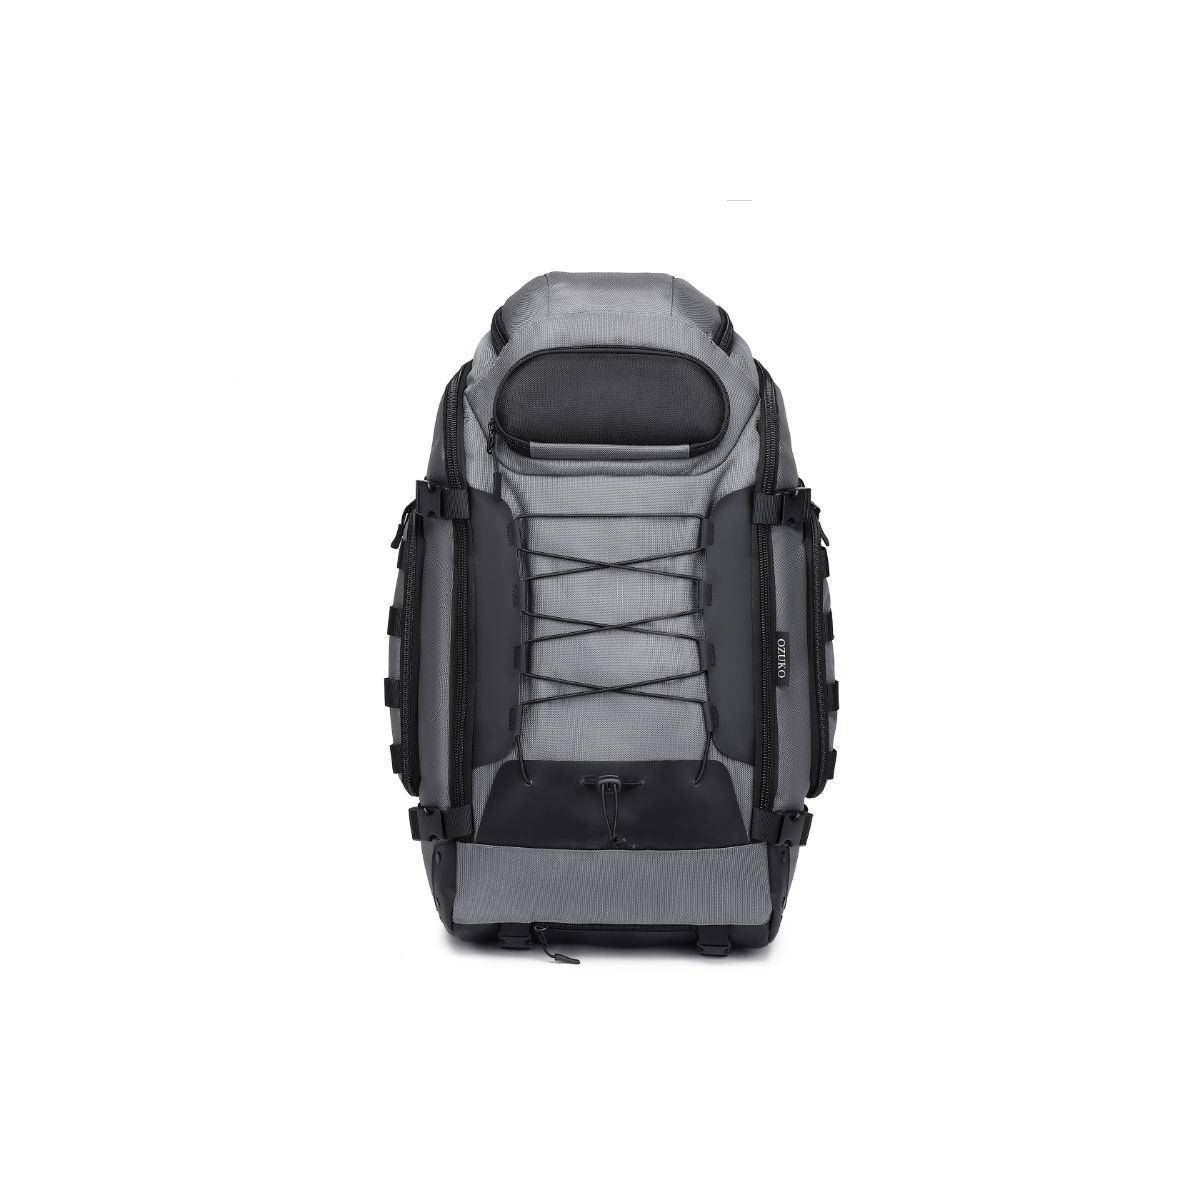 ozuko 9326 BACKPACK 5 L Backpack Black - Price in India | Flipkart.com